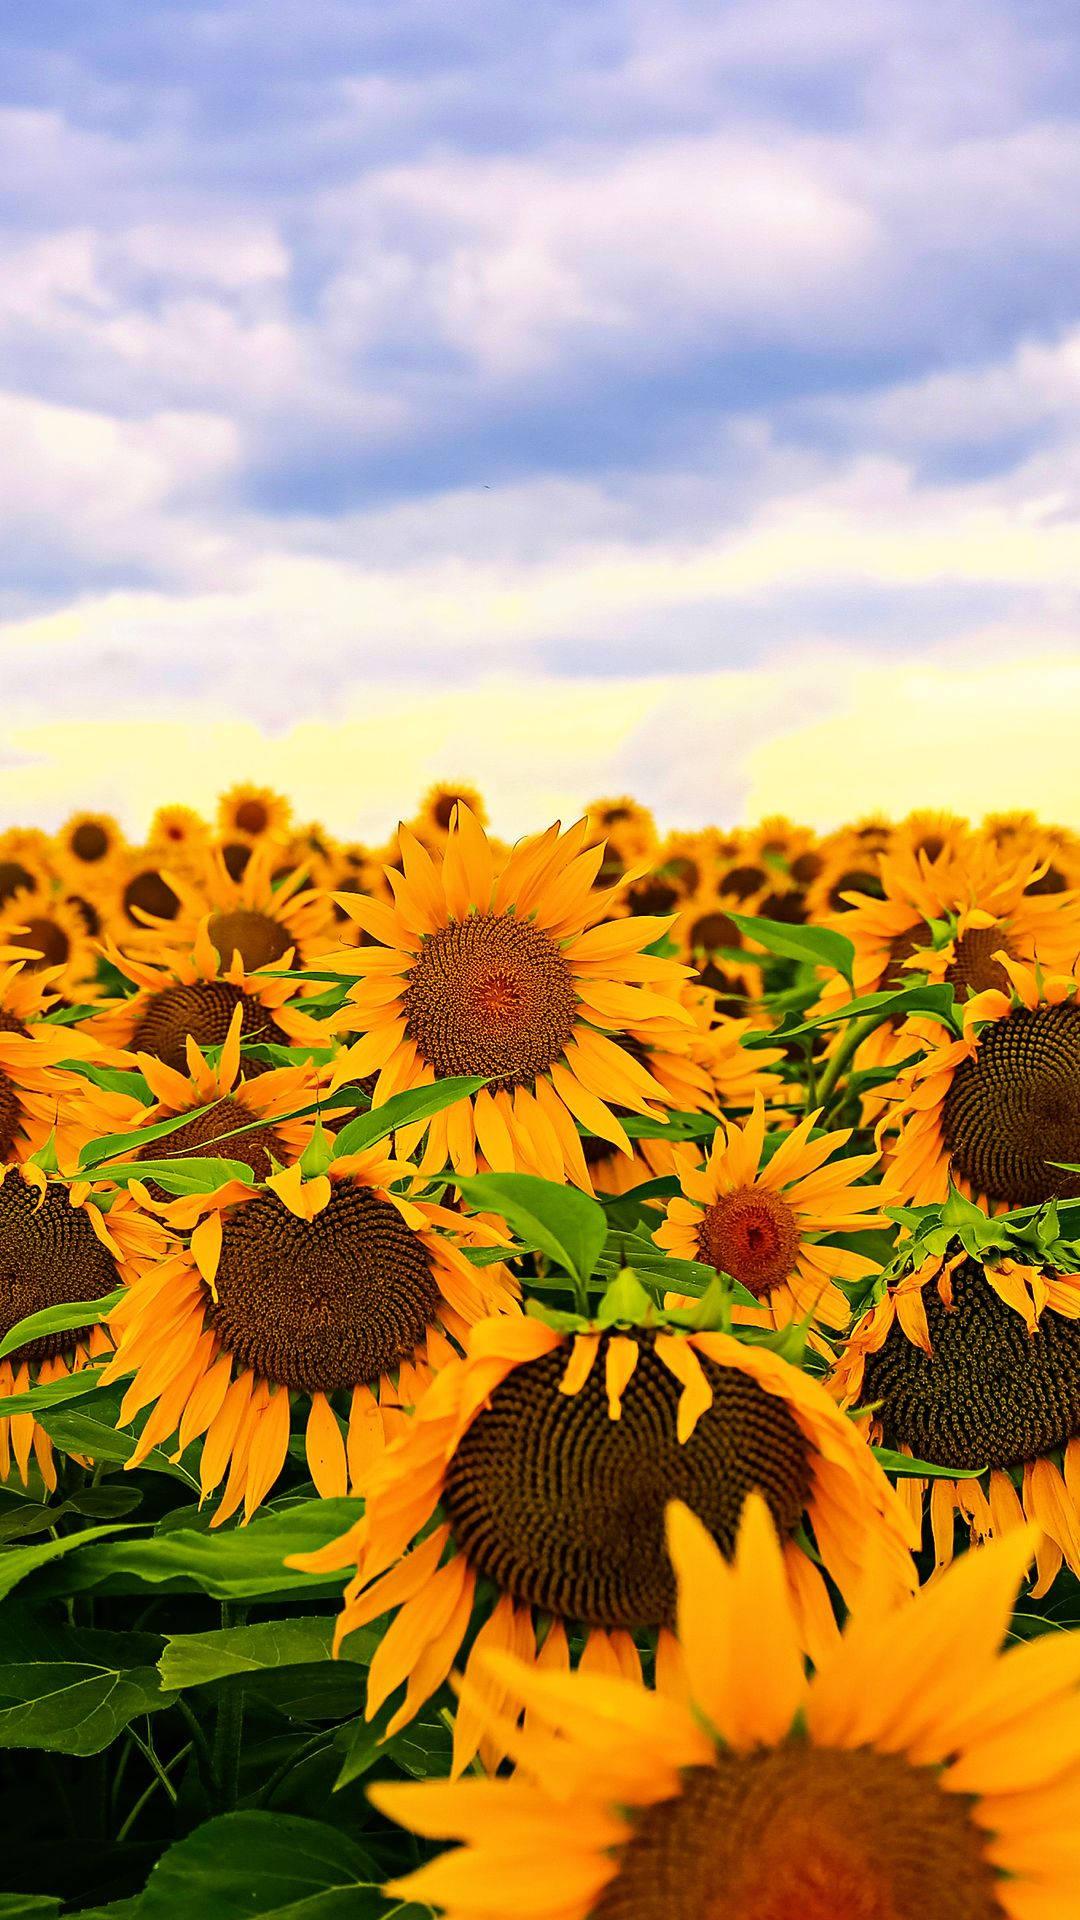 Aesthetic Shot Of Sunflowers Iphone Wallpaper